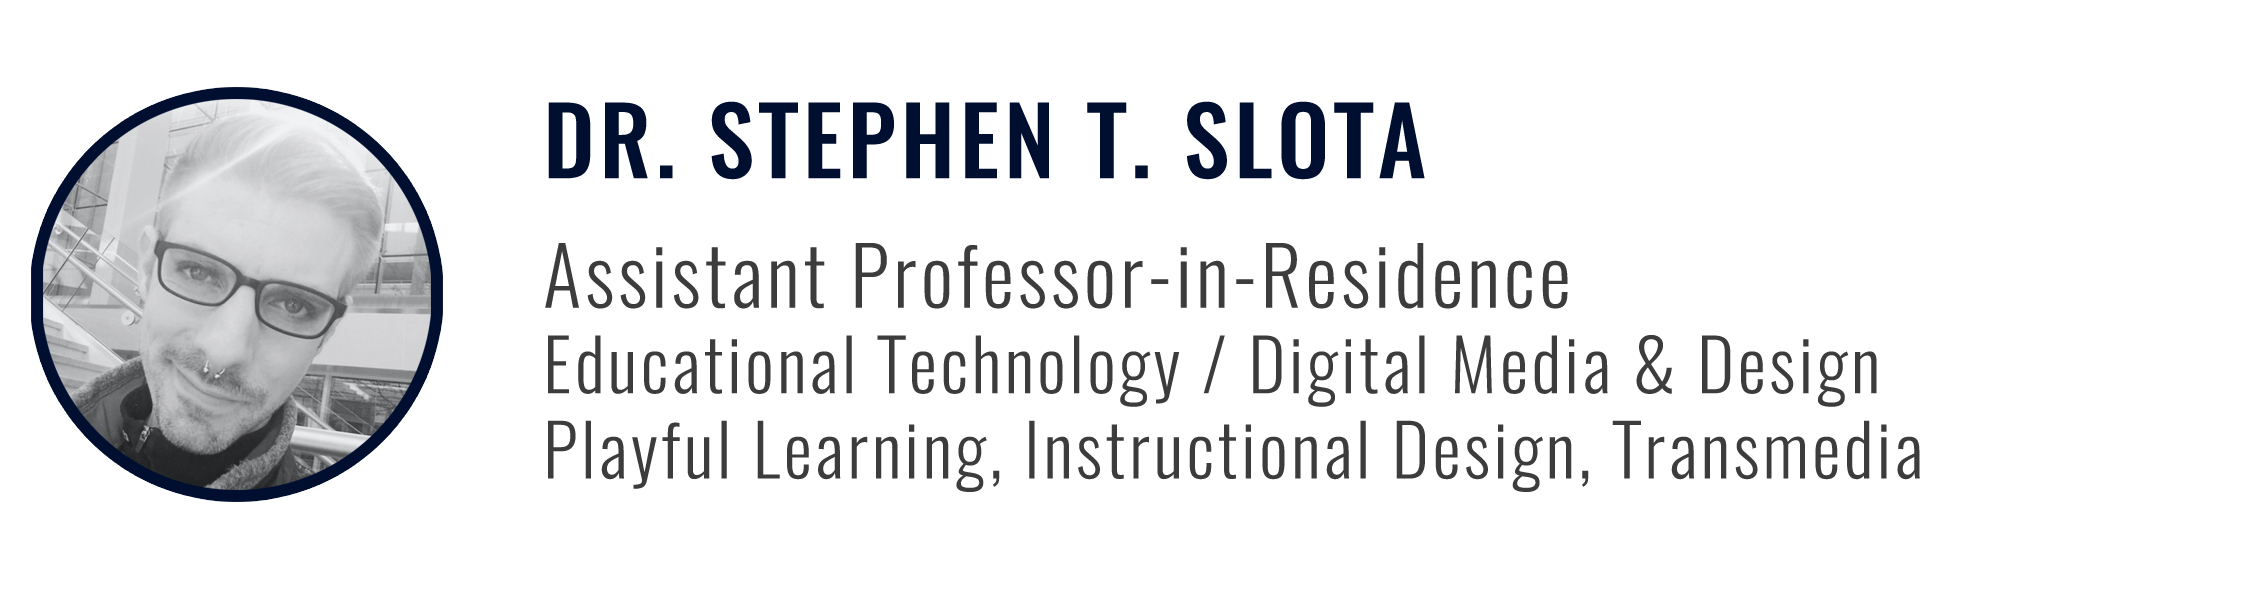 Dr. Stephen Slota, Asst. Prof. in Res., Educational Technology